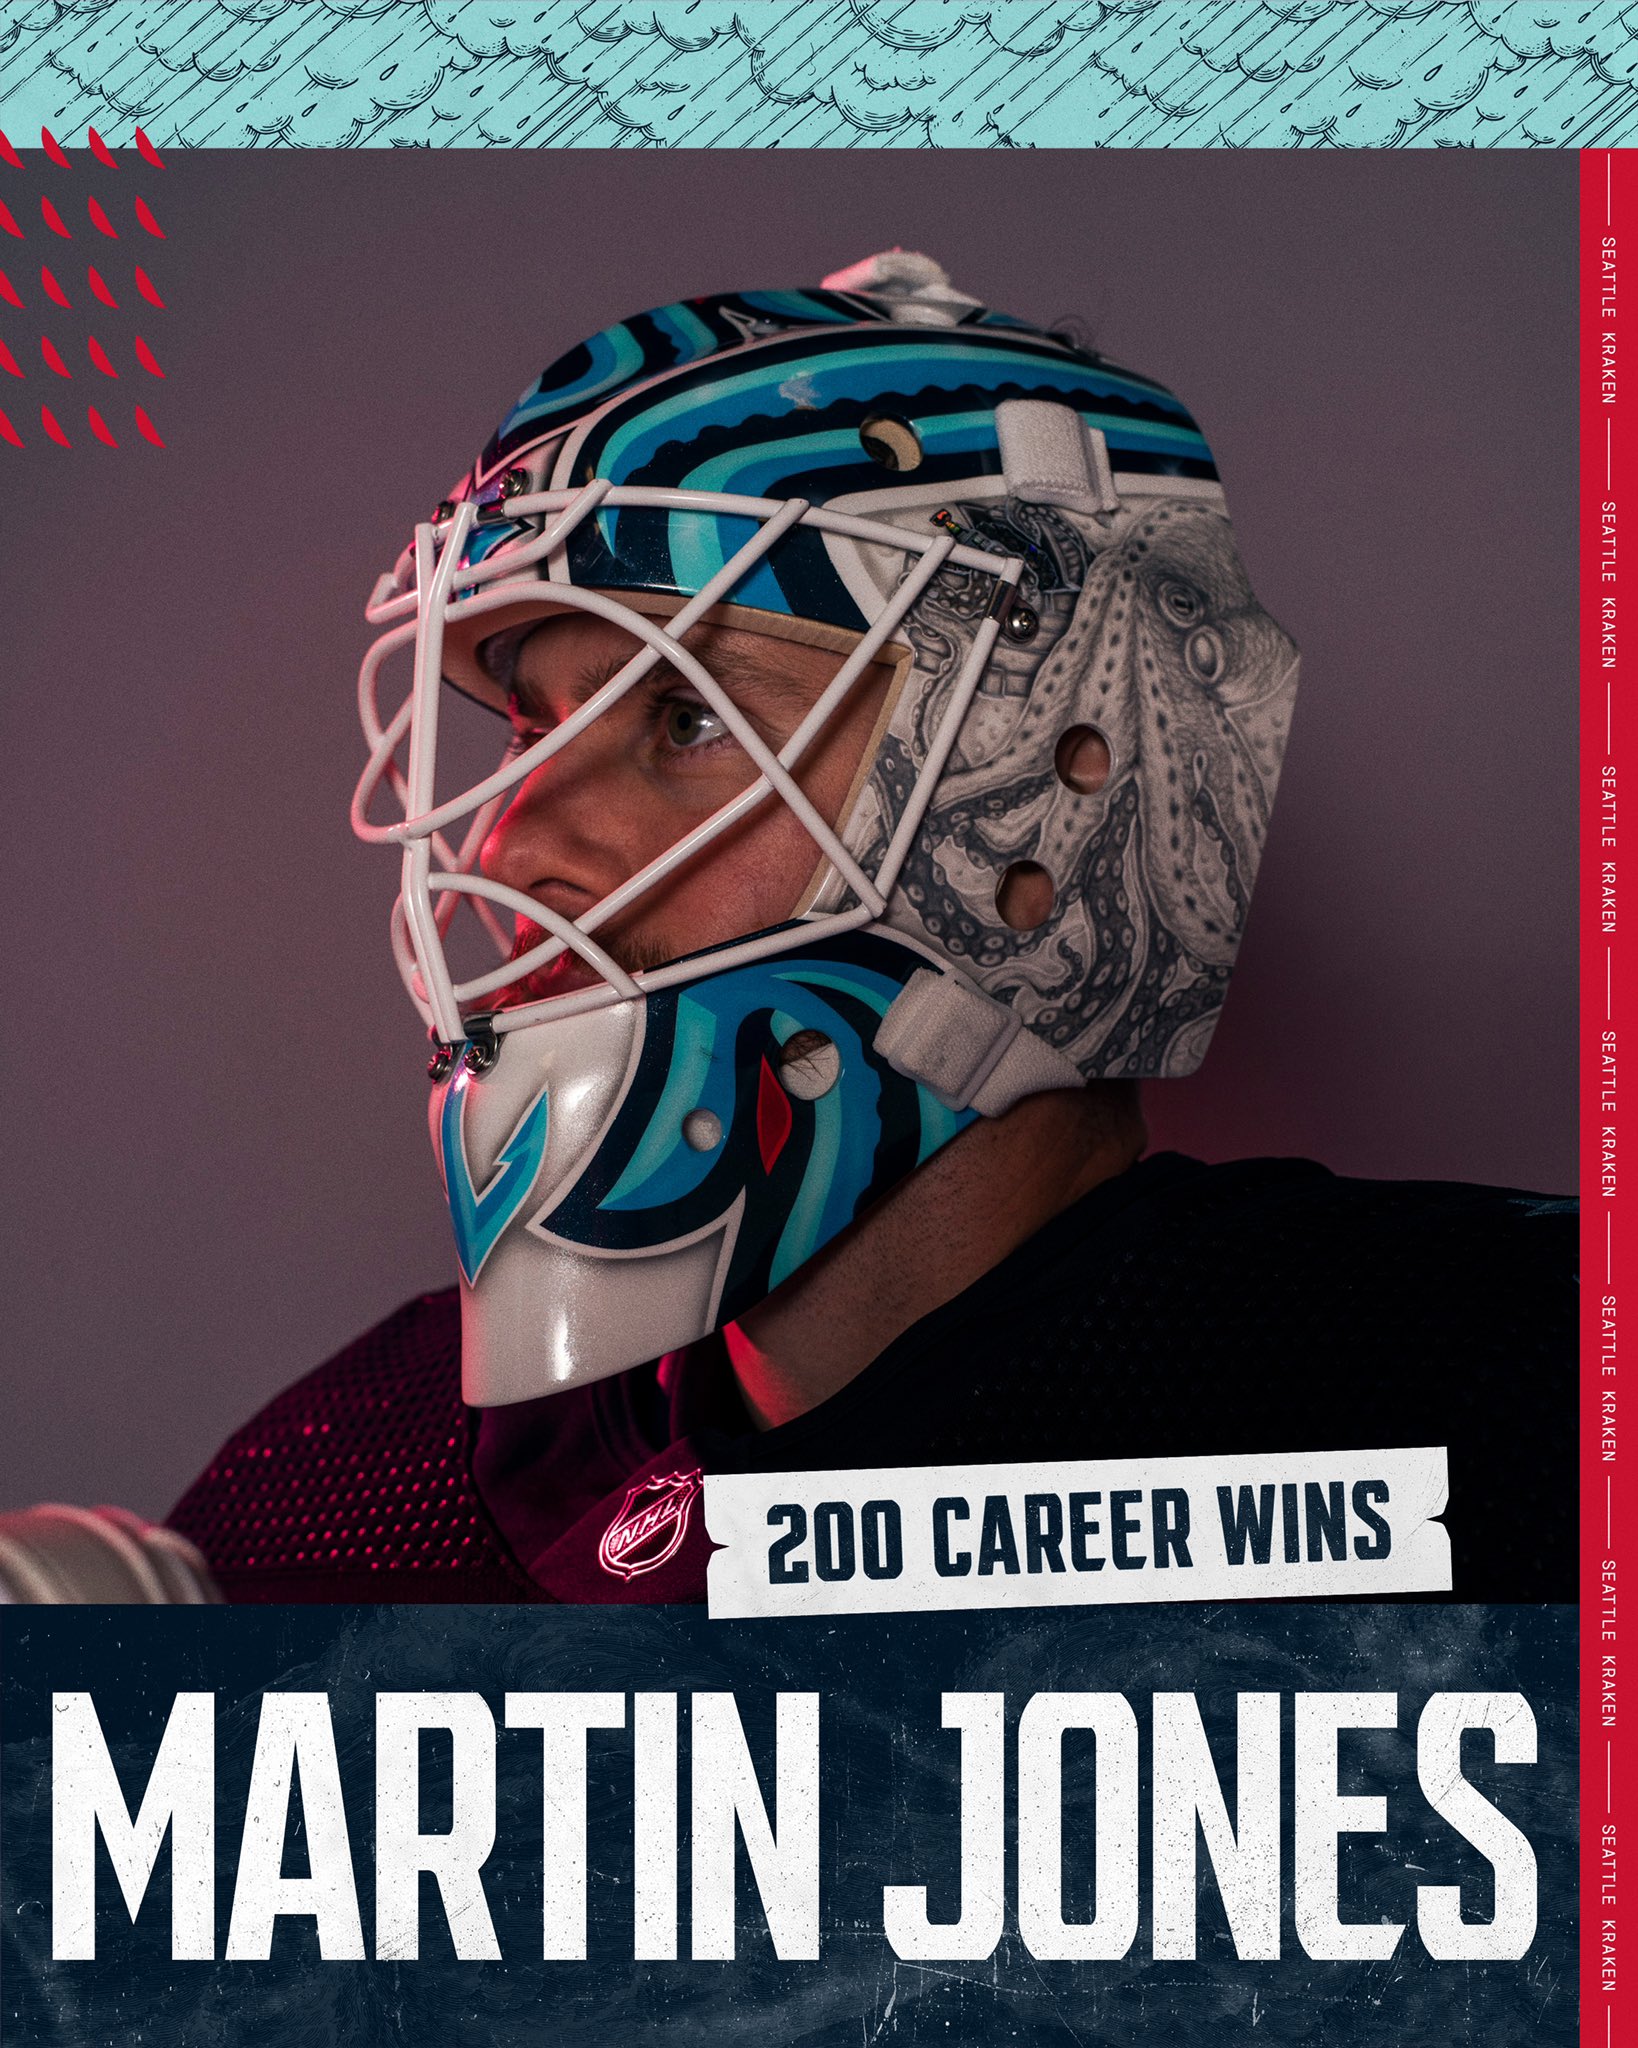 NHL - Martin Jones' new mask with the Seattle Kraken is